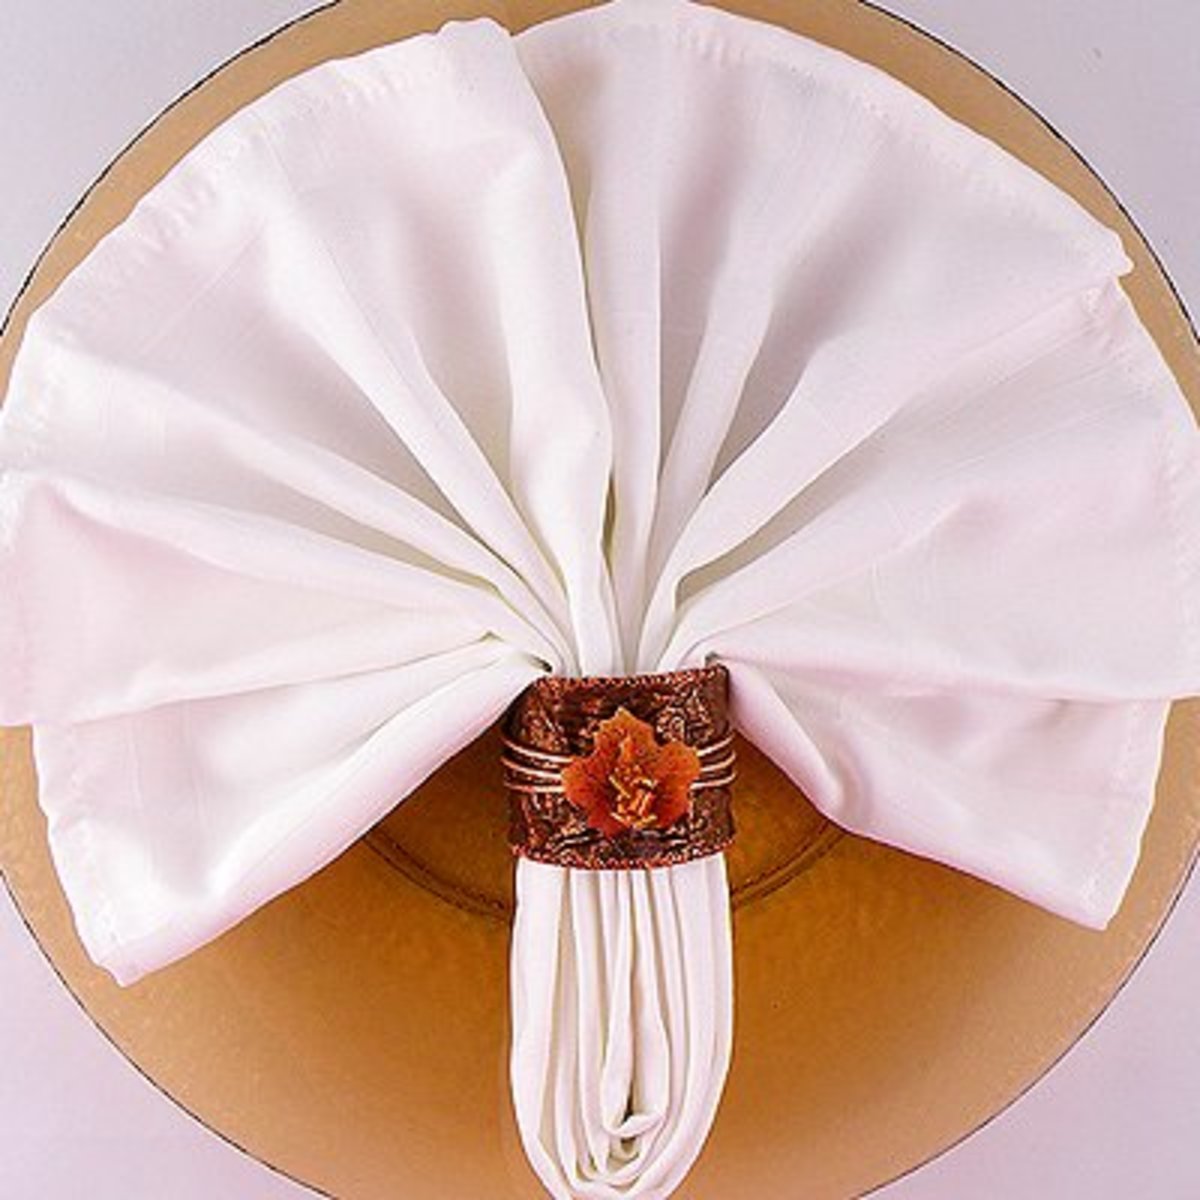 basic-dining-etiquette-using-a-napkin